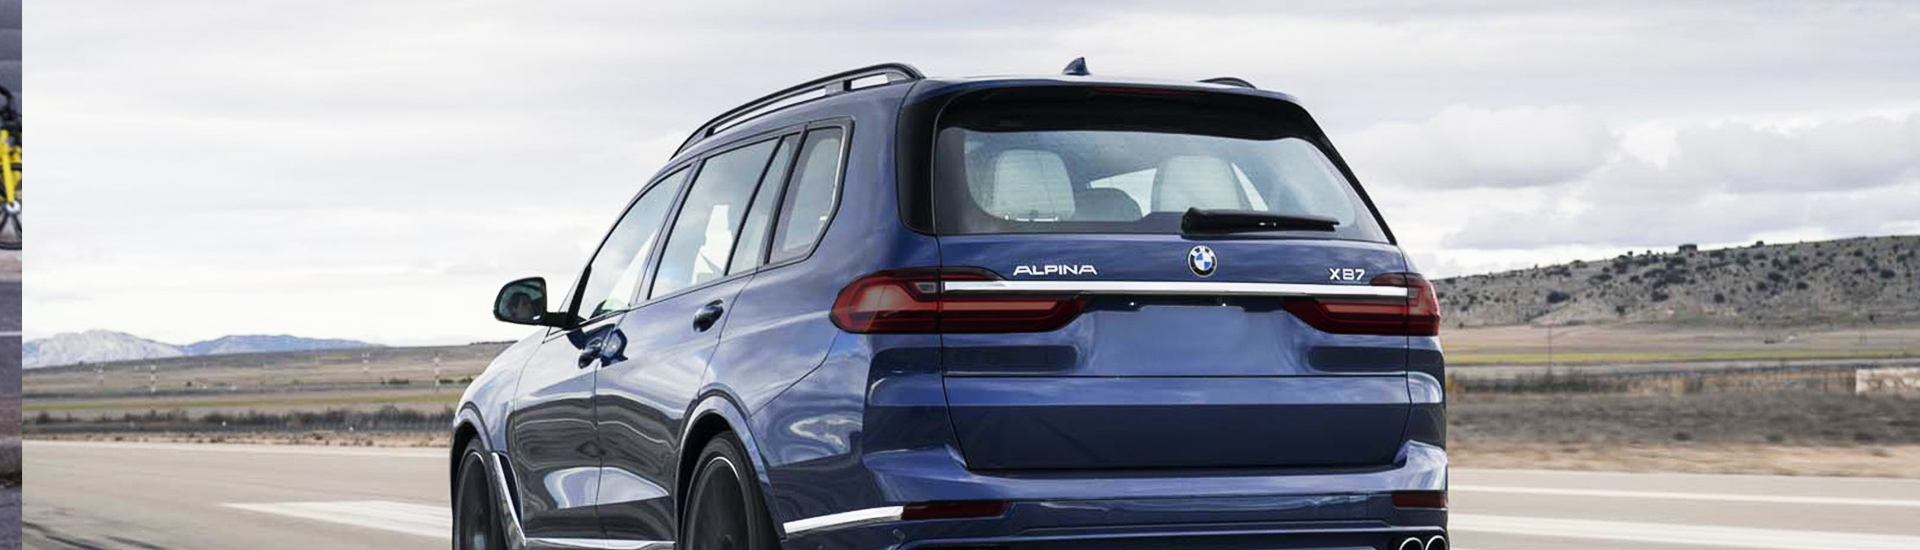 BMW Alpina XB7 Tail Light Tint Covers